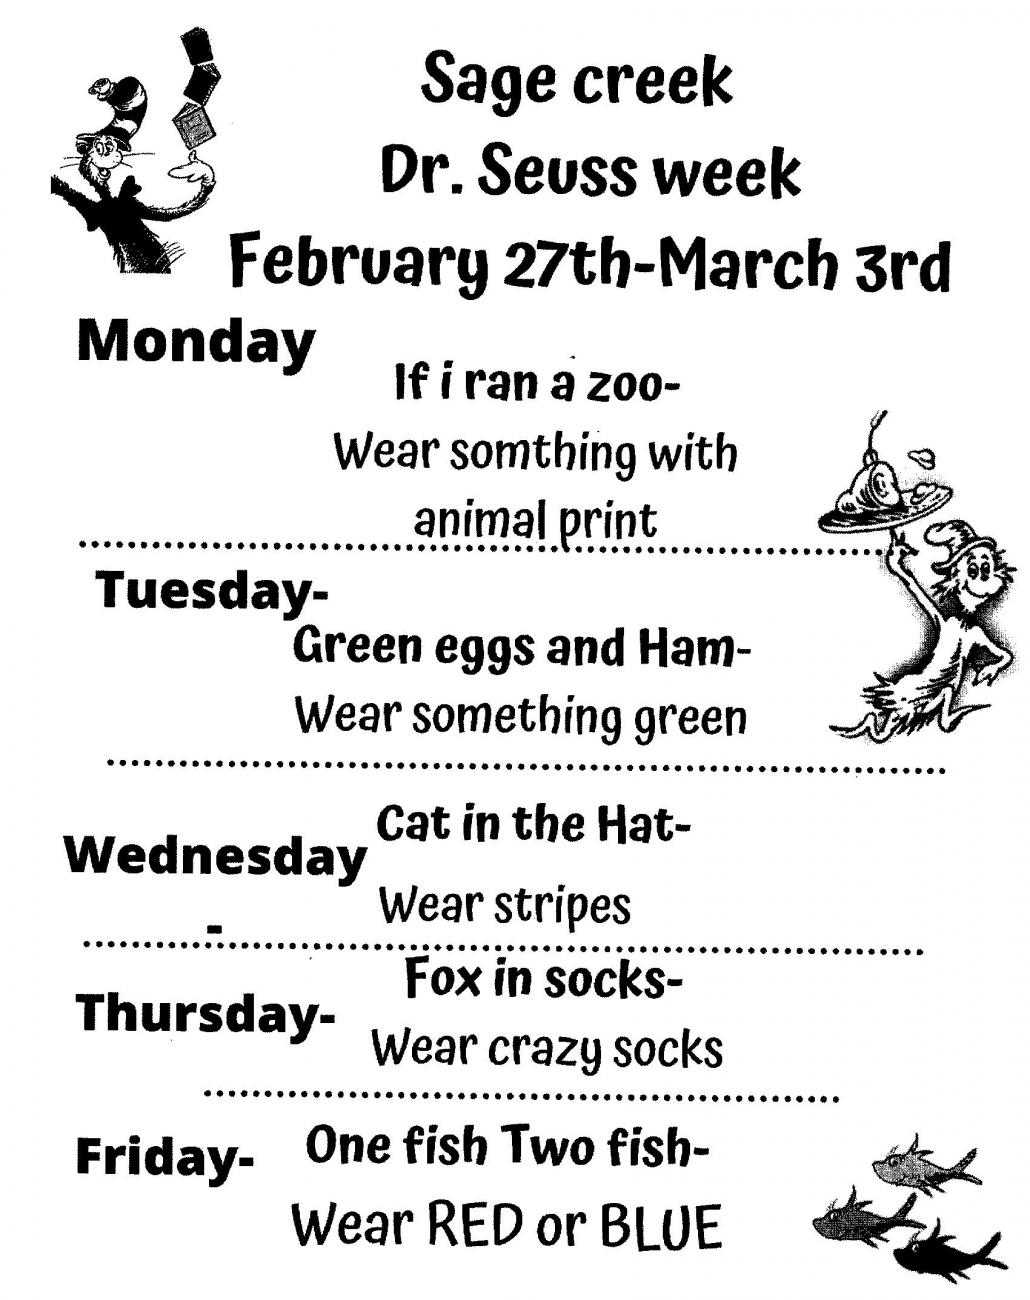 Dr. Seuss Week Sage Creek Elementary